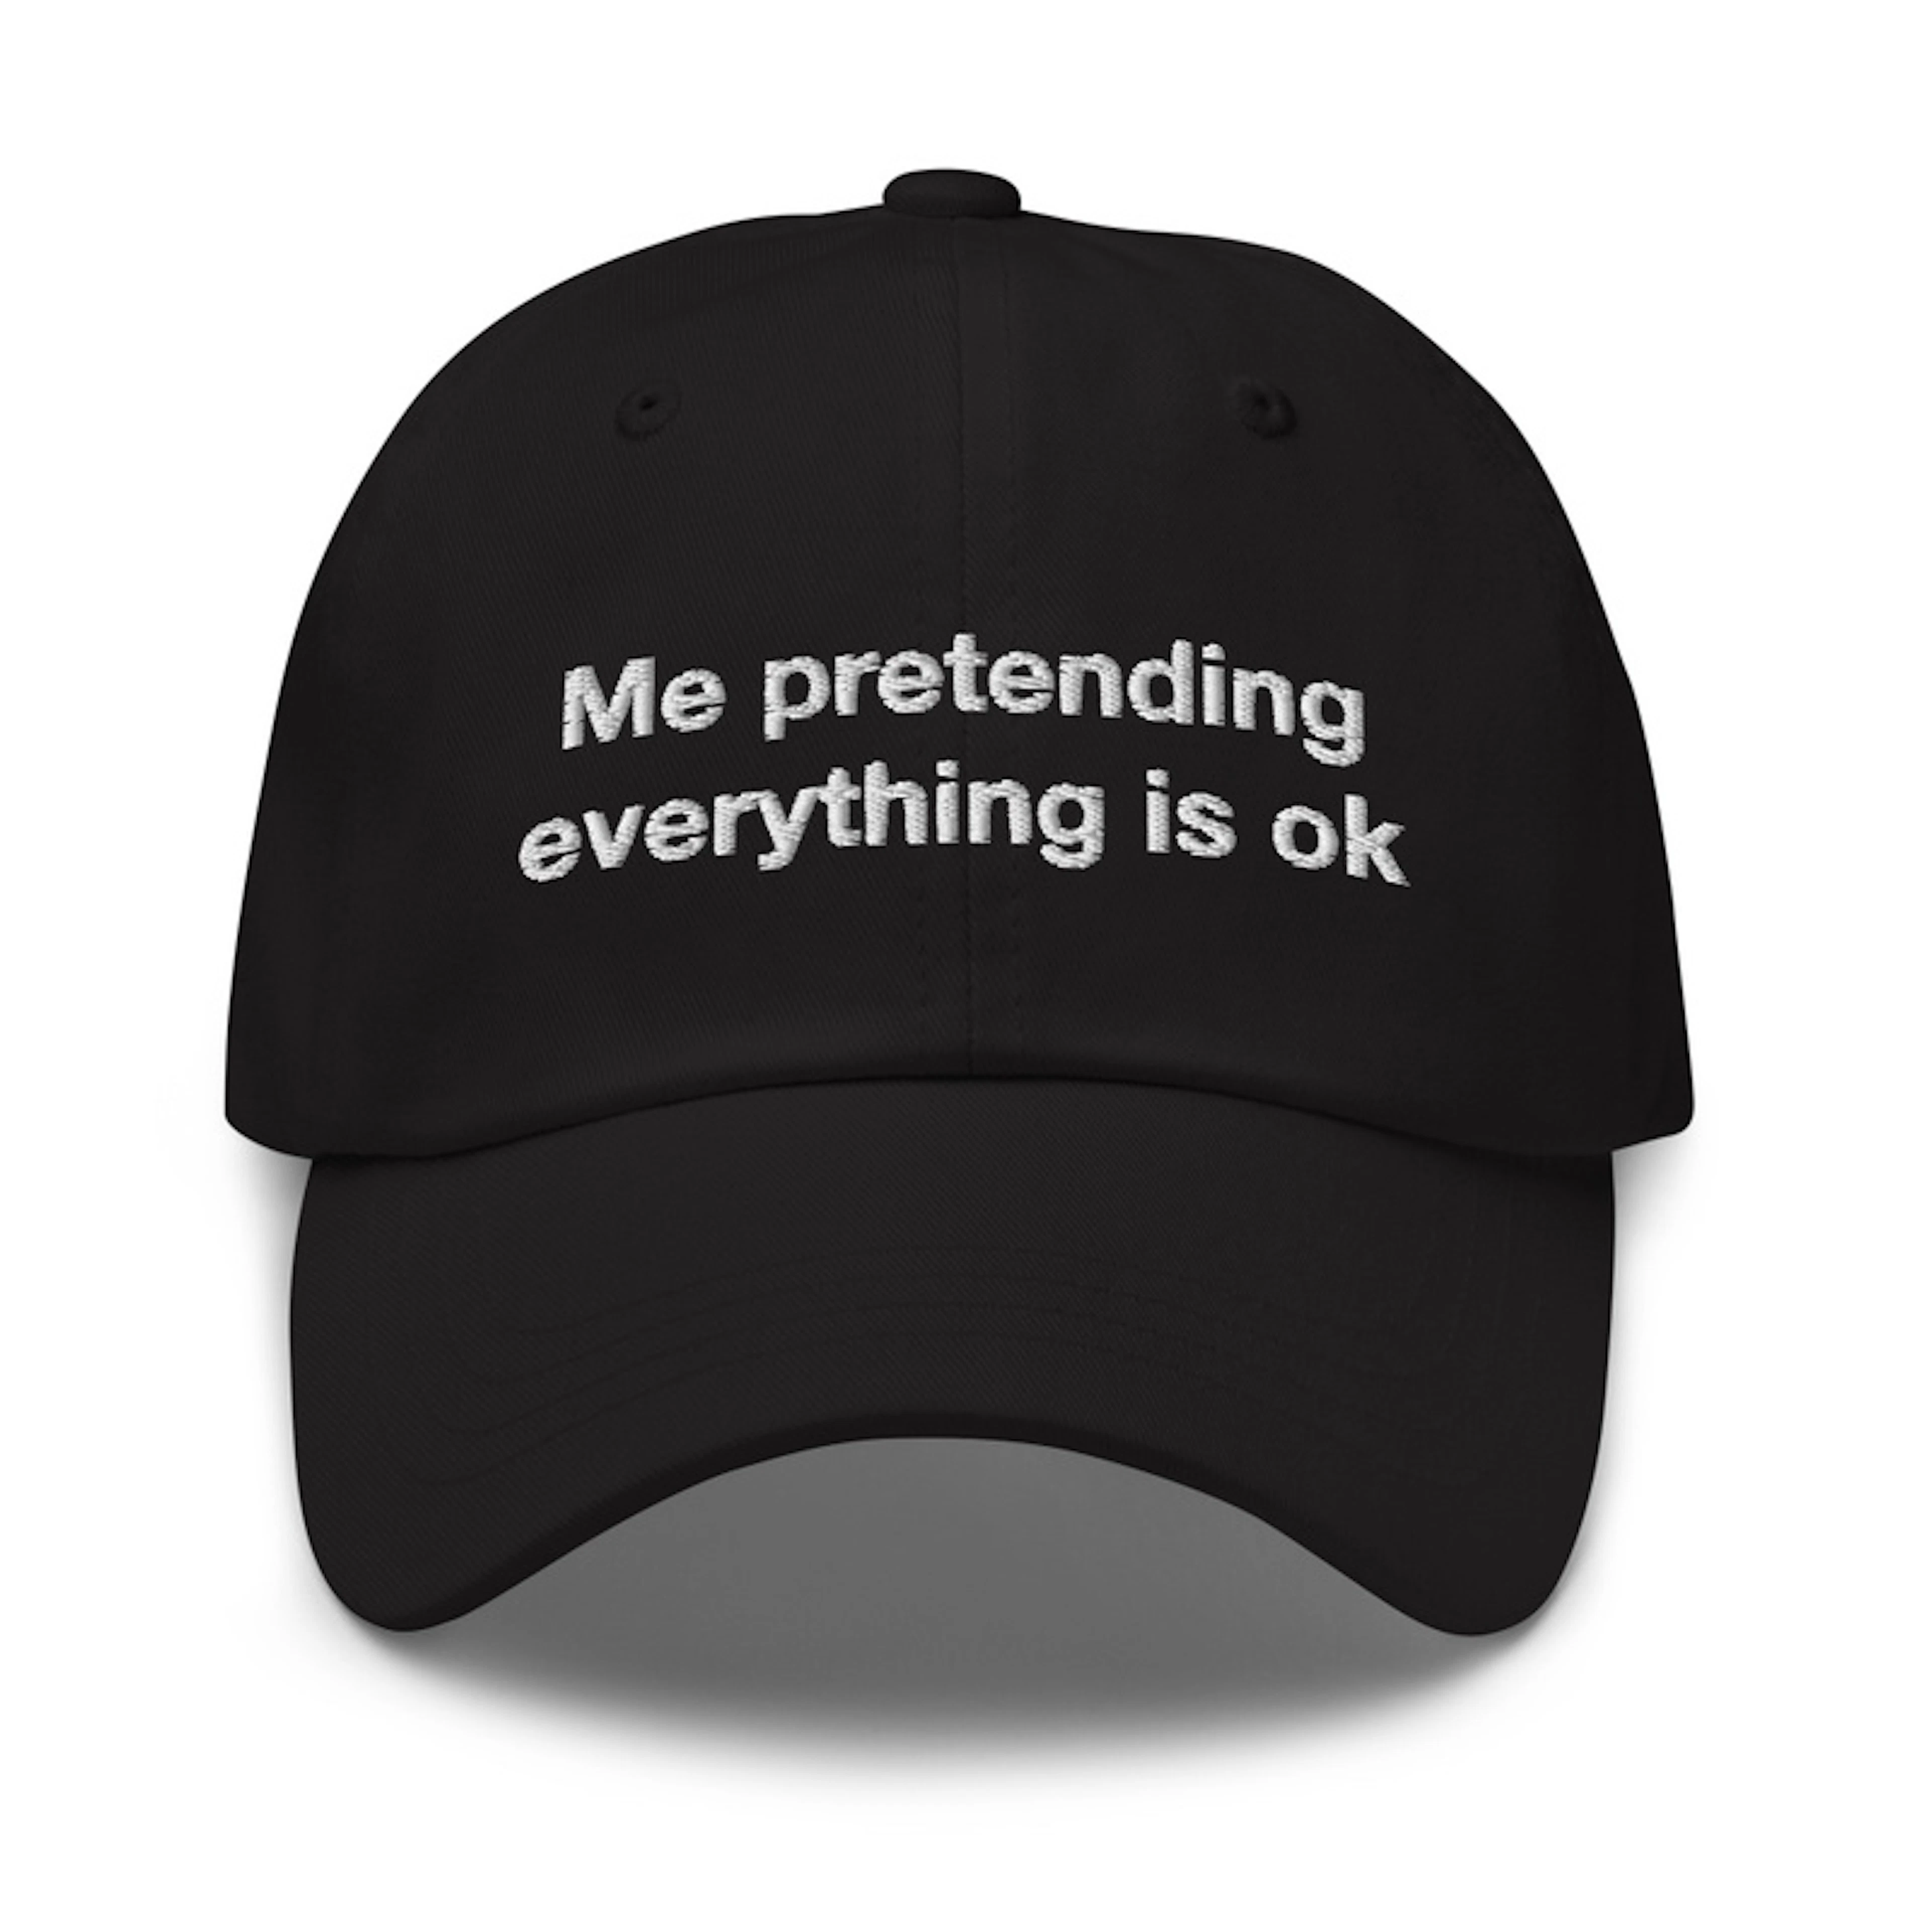 Me pretending everything is ok